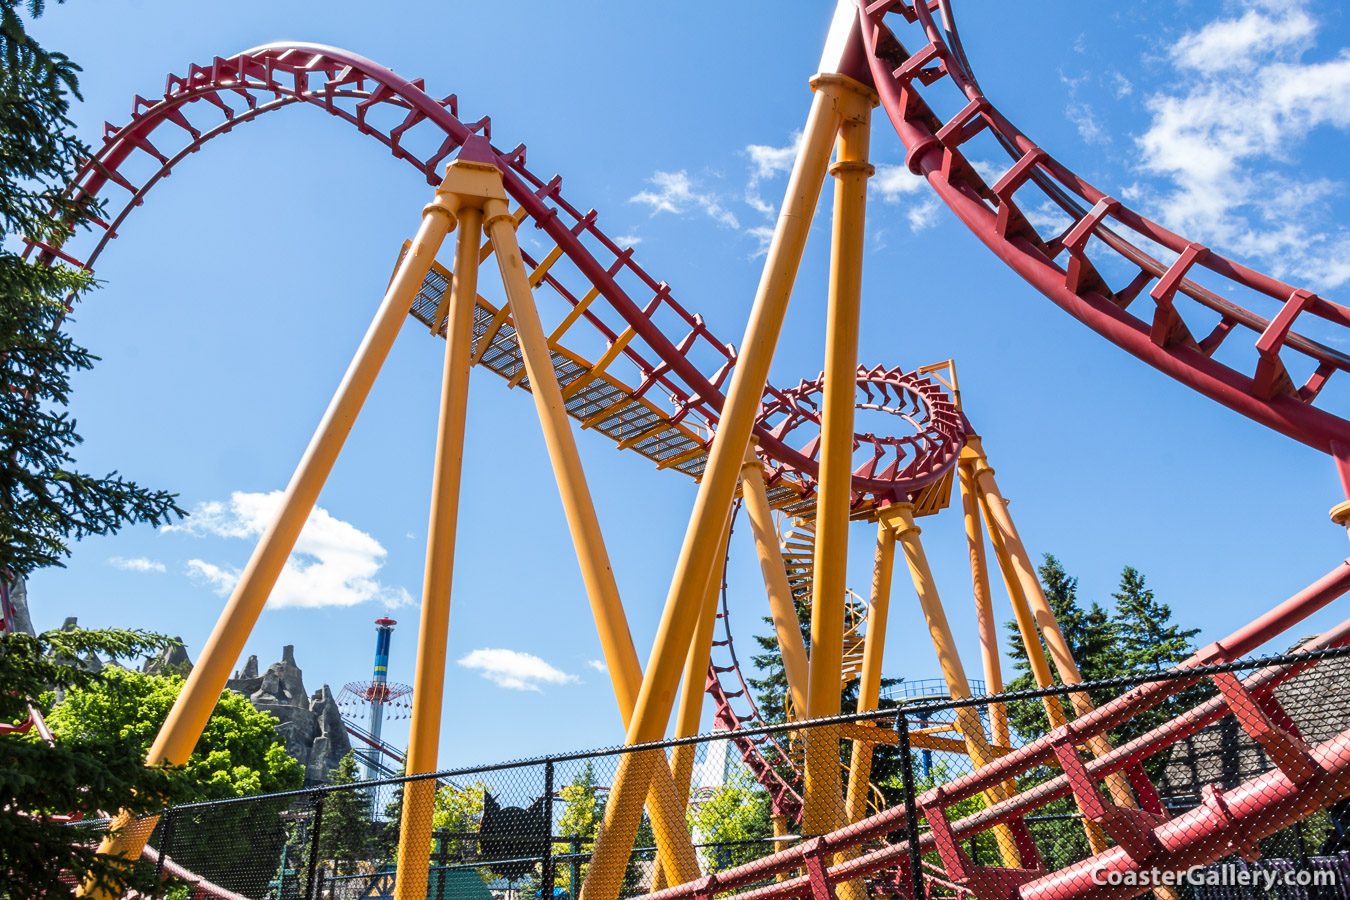 The Bat roller coaster in Canada's Wonderland